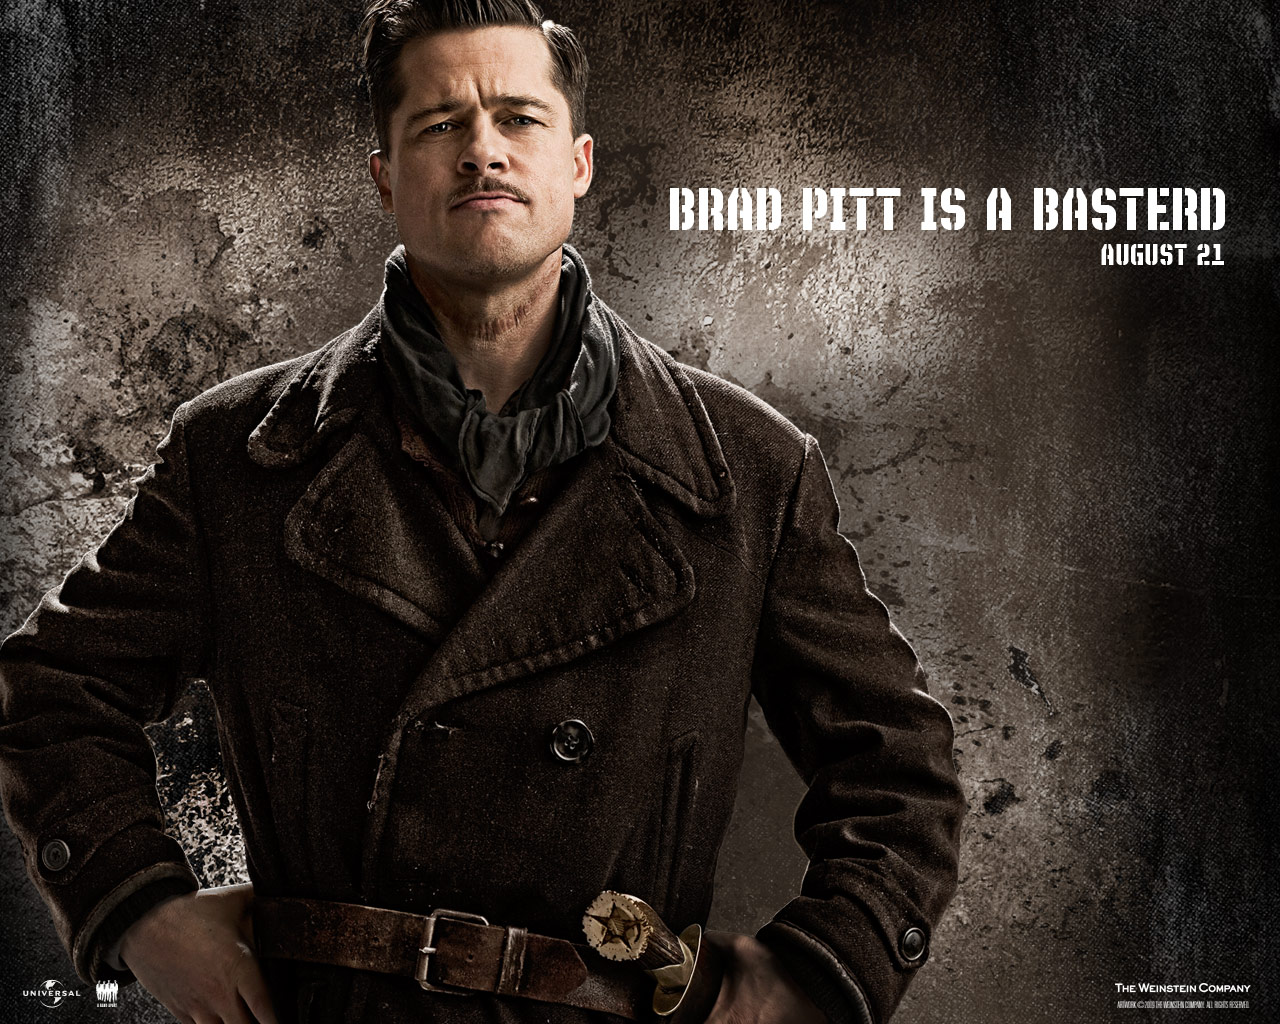 Brad Pitt's messy hair in "Inglourious Basterds" - wide 1